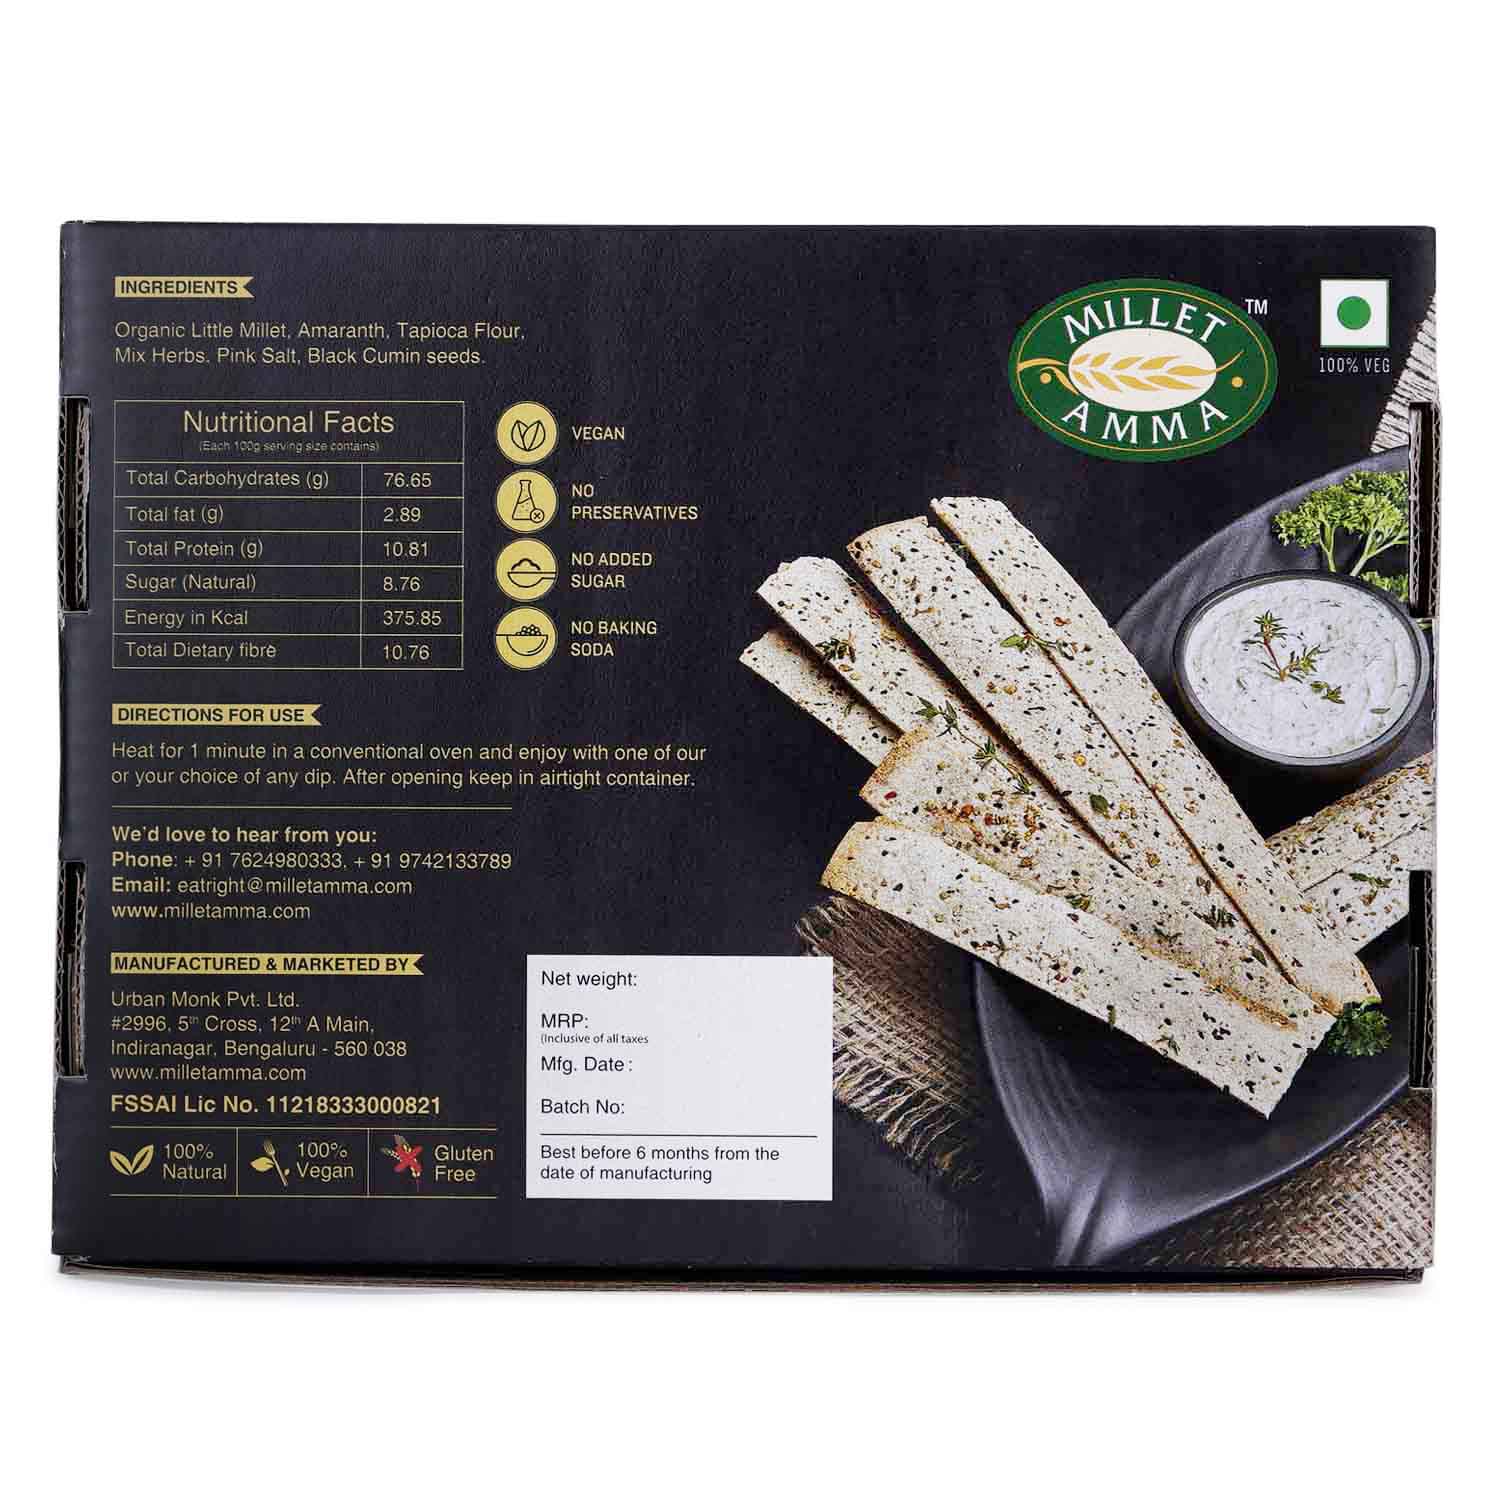 Organic Millet Pizza Base 6 Pieces 200gm + Millet Lavash Gluten Free 150gm + Bajra Methi  Khakhra 180gm